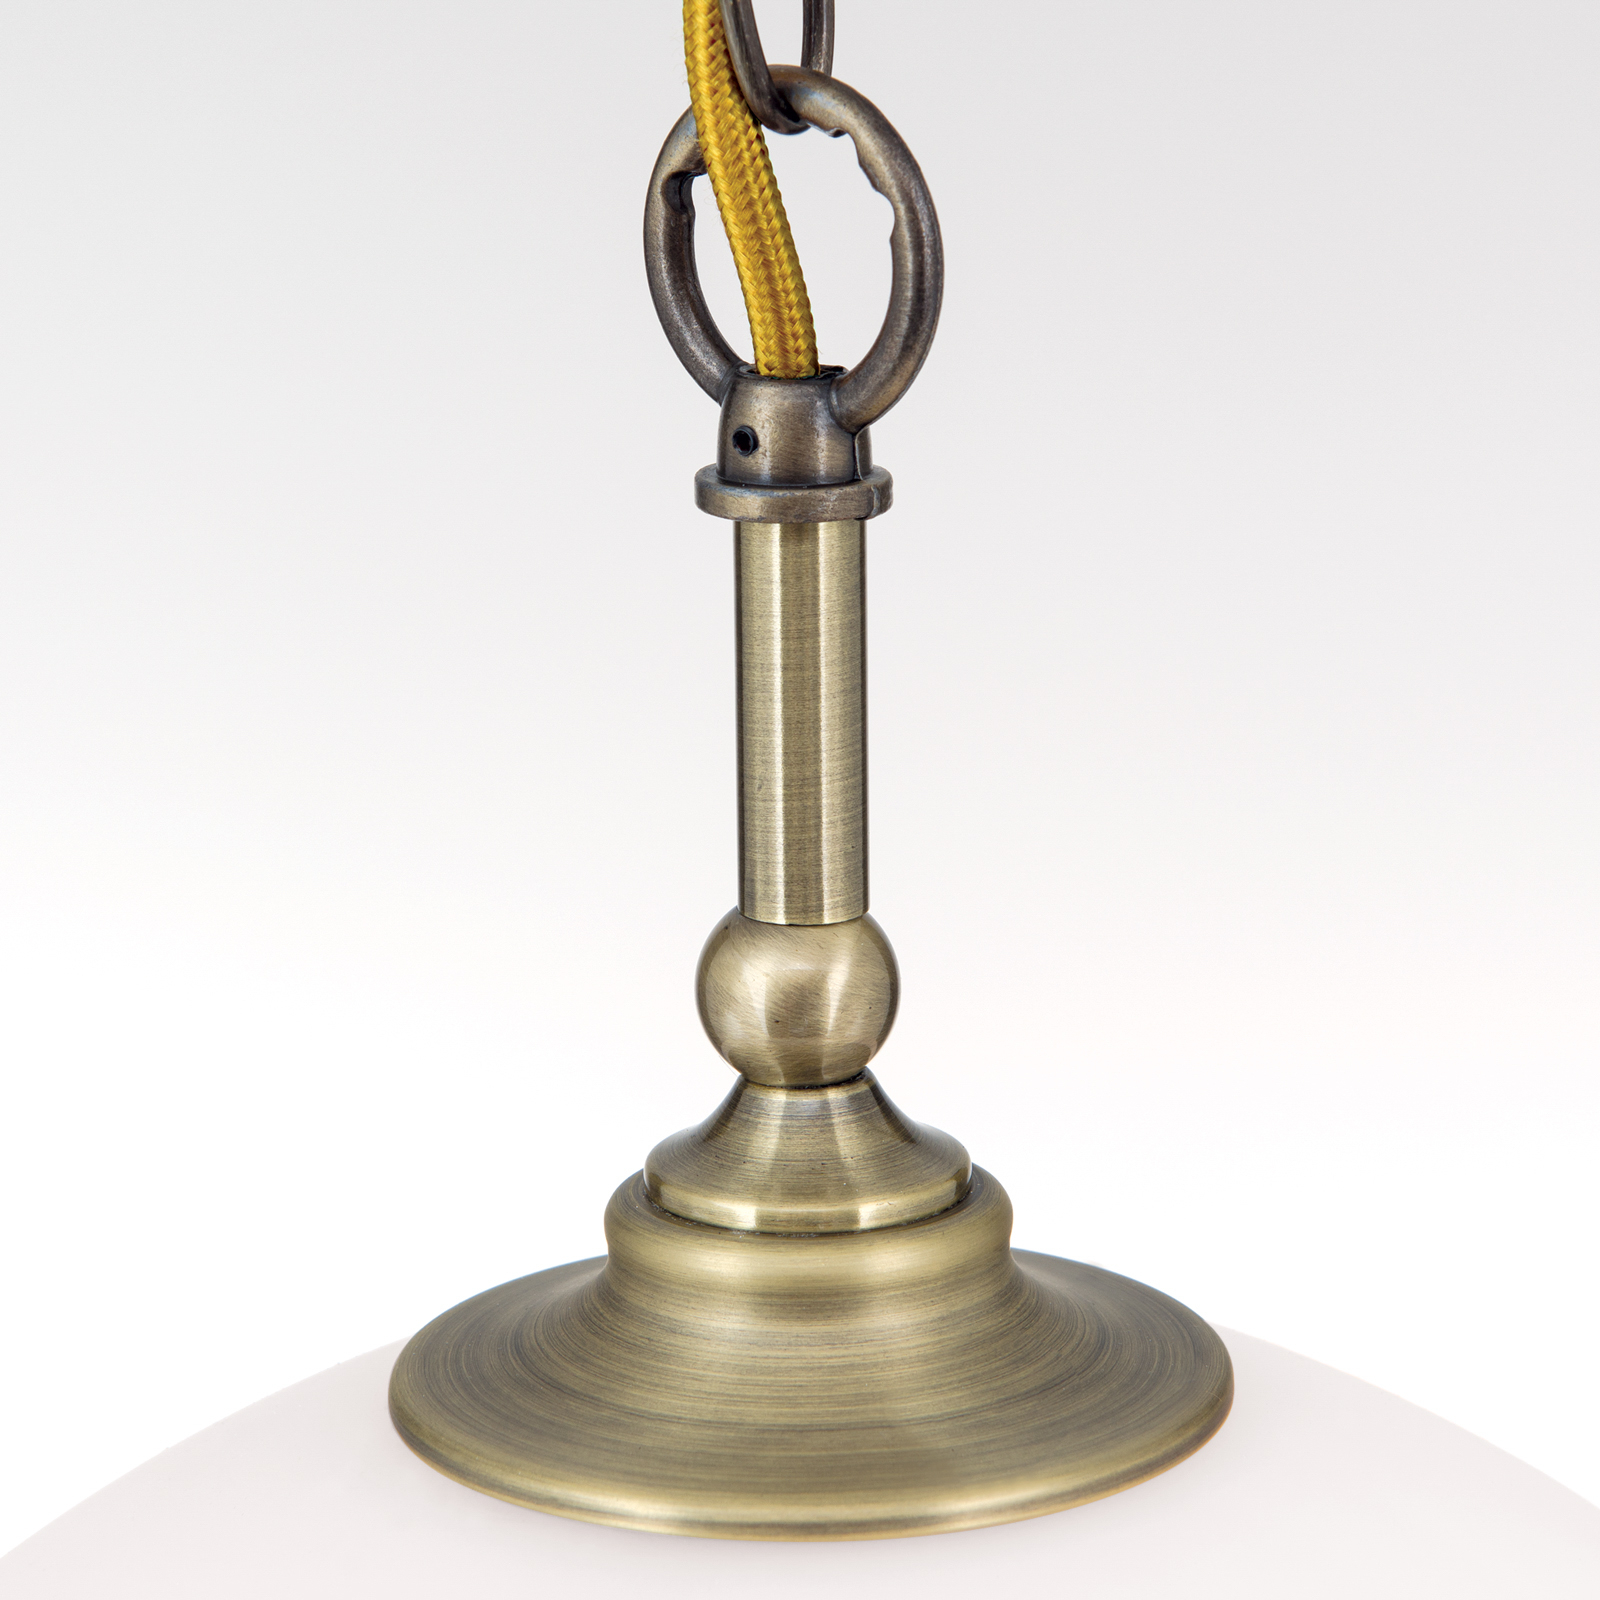 Hanglamp Old Lamp met kettingophanging, 1-lamp